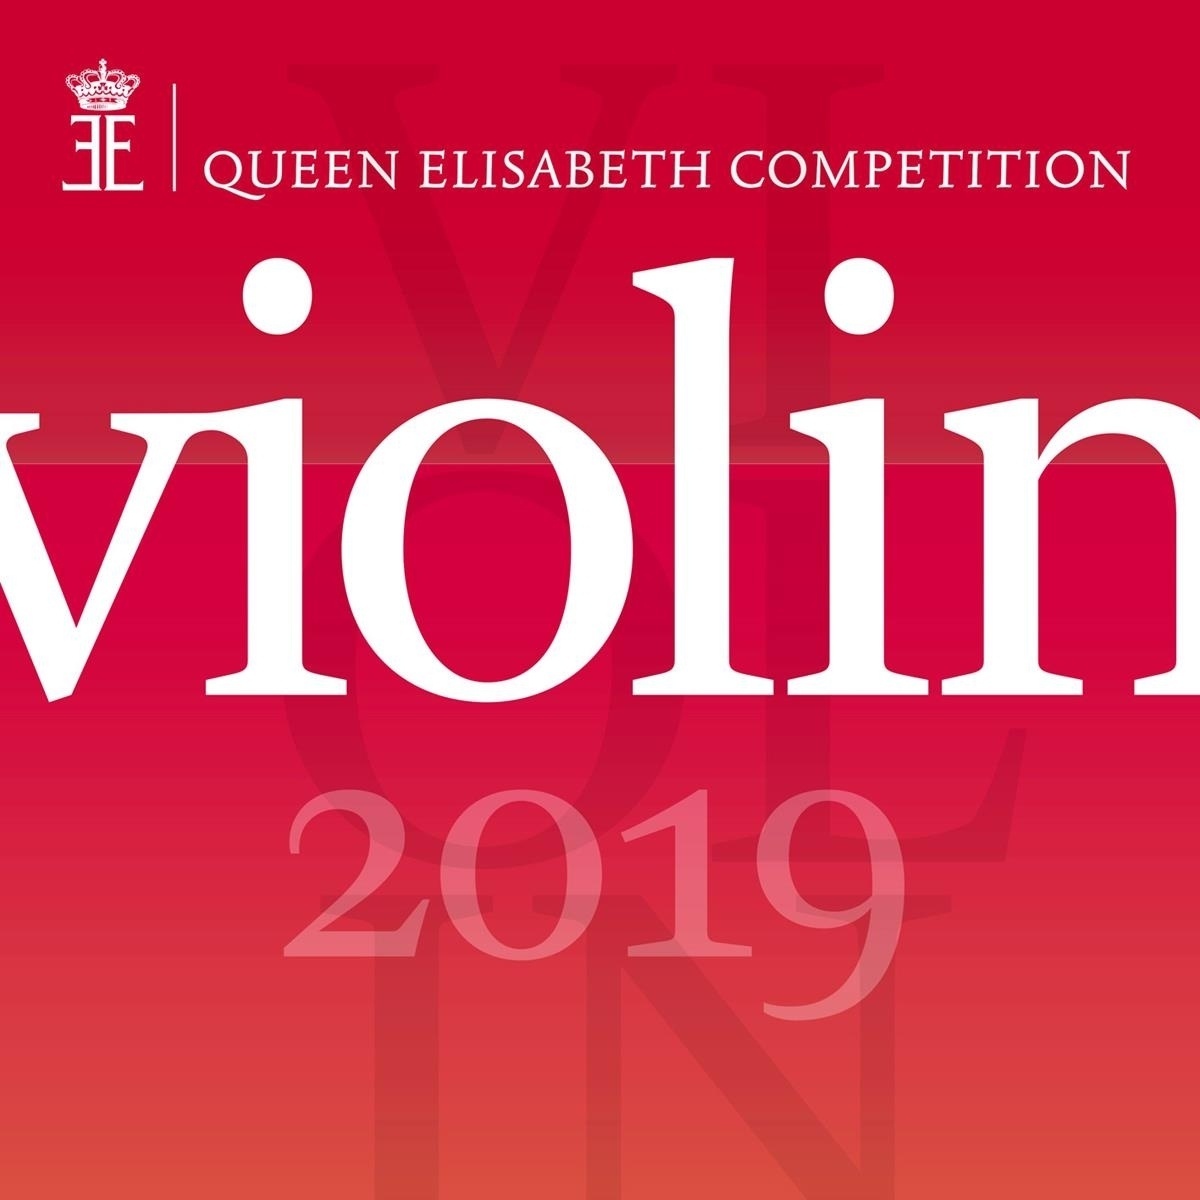 Queen Elisabeth Competition 2019 - Chen  Kim  Pusker  Okamoto  Goicea  Lee  Huang. (CD)